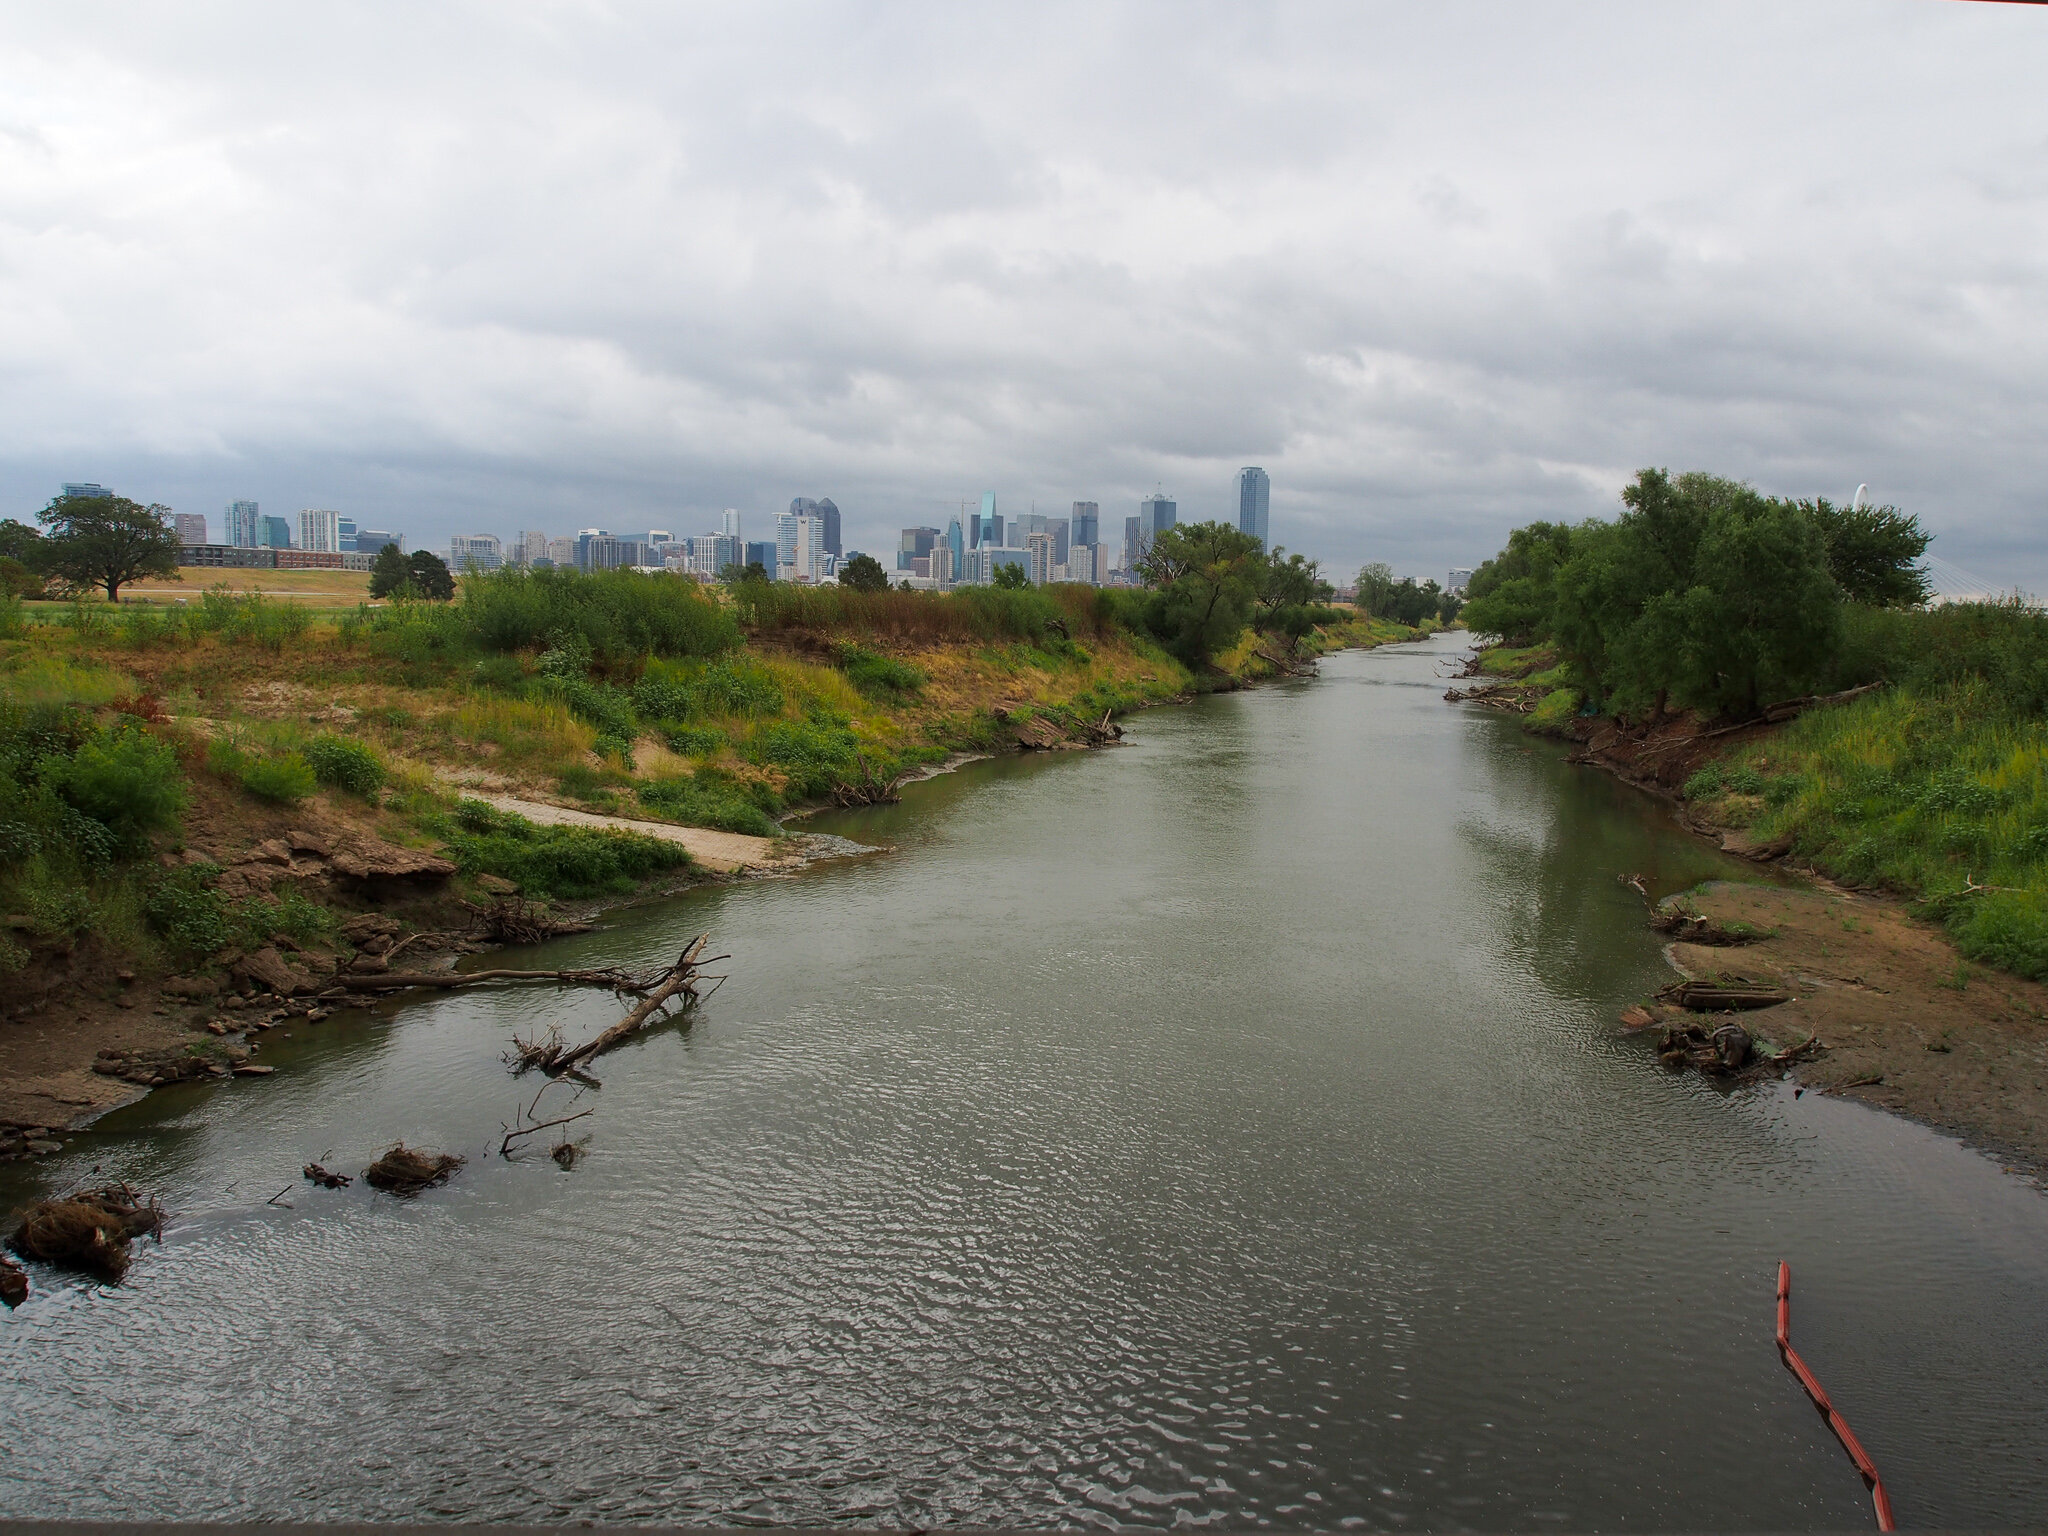  Trinity River near Trammel Crow Park, looking toward downtown Dallas.  